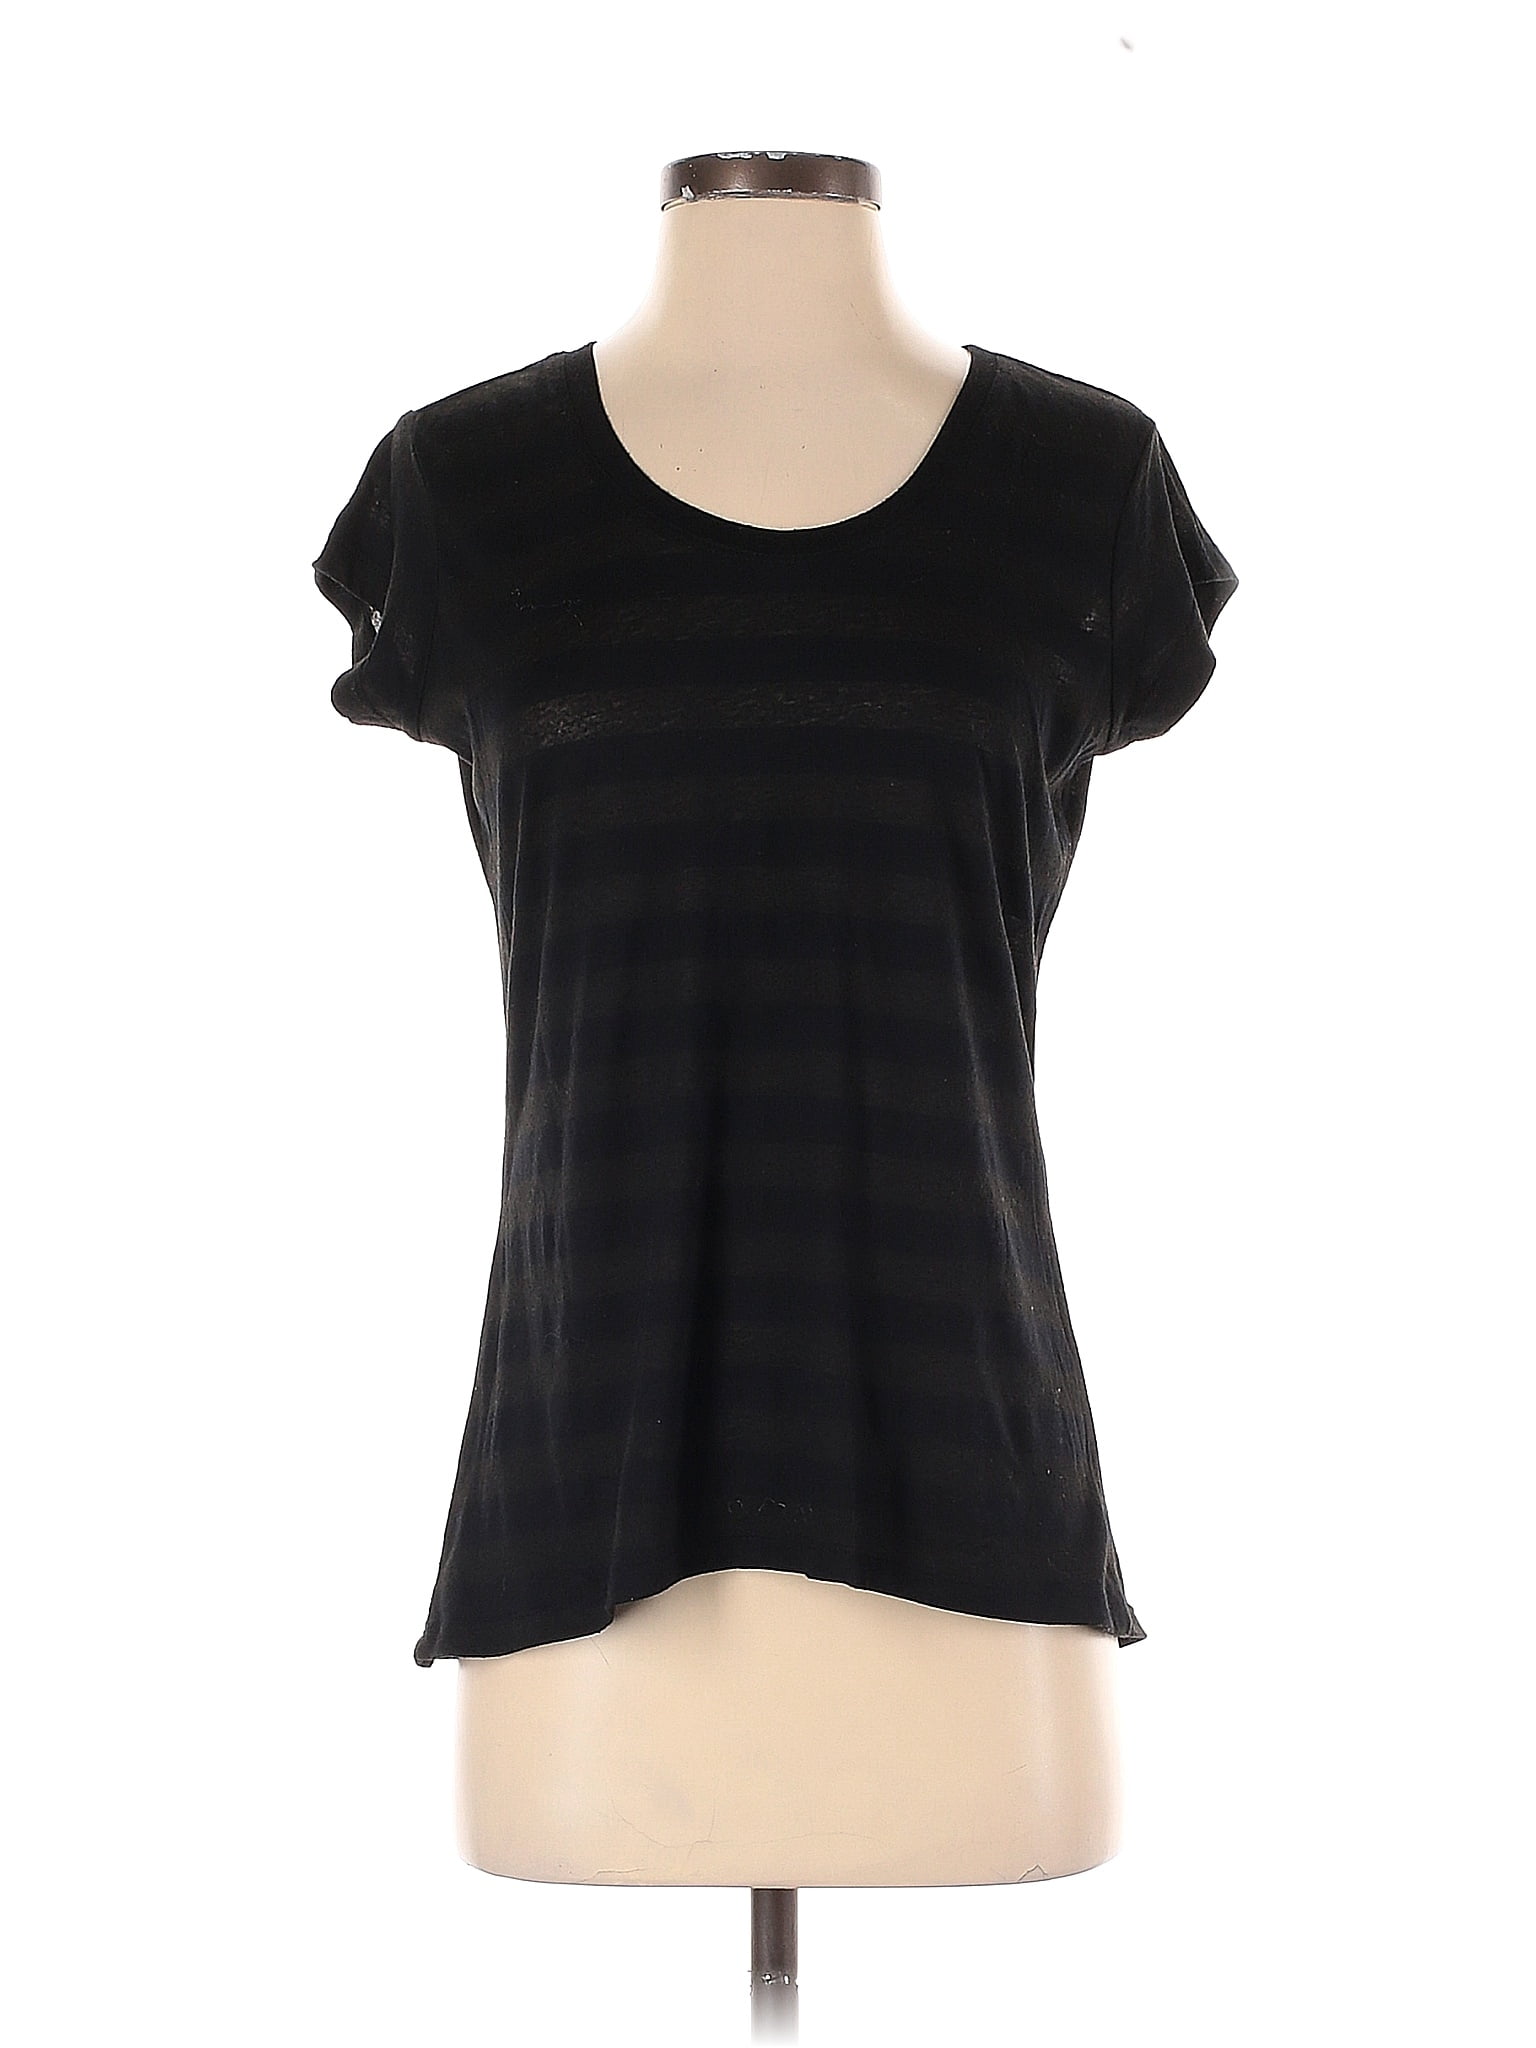 Marika Black Active T-Shirt Size XL - 70% off